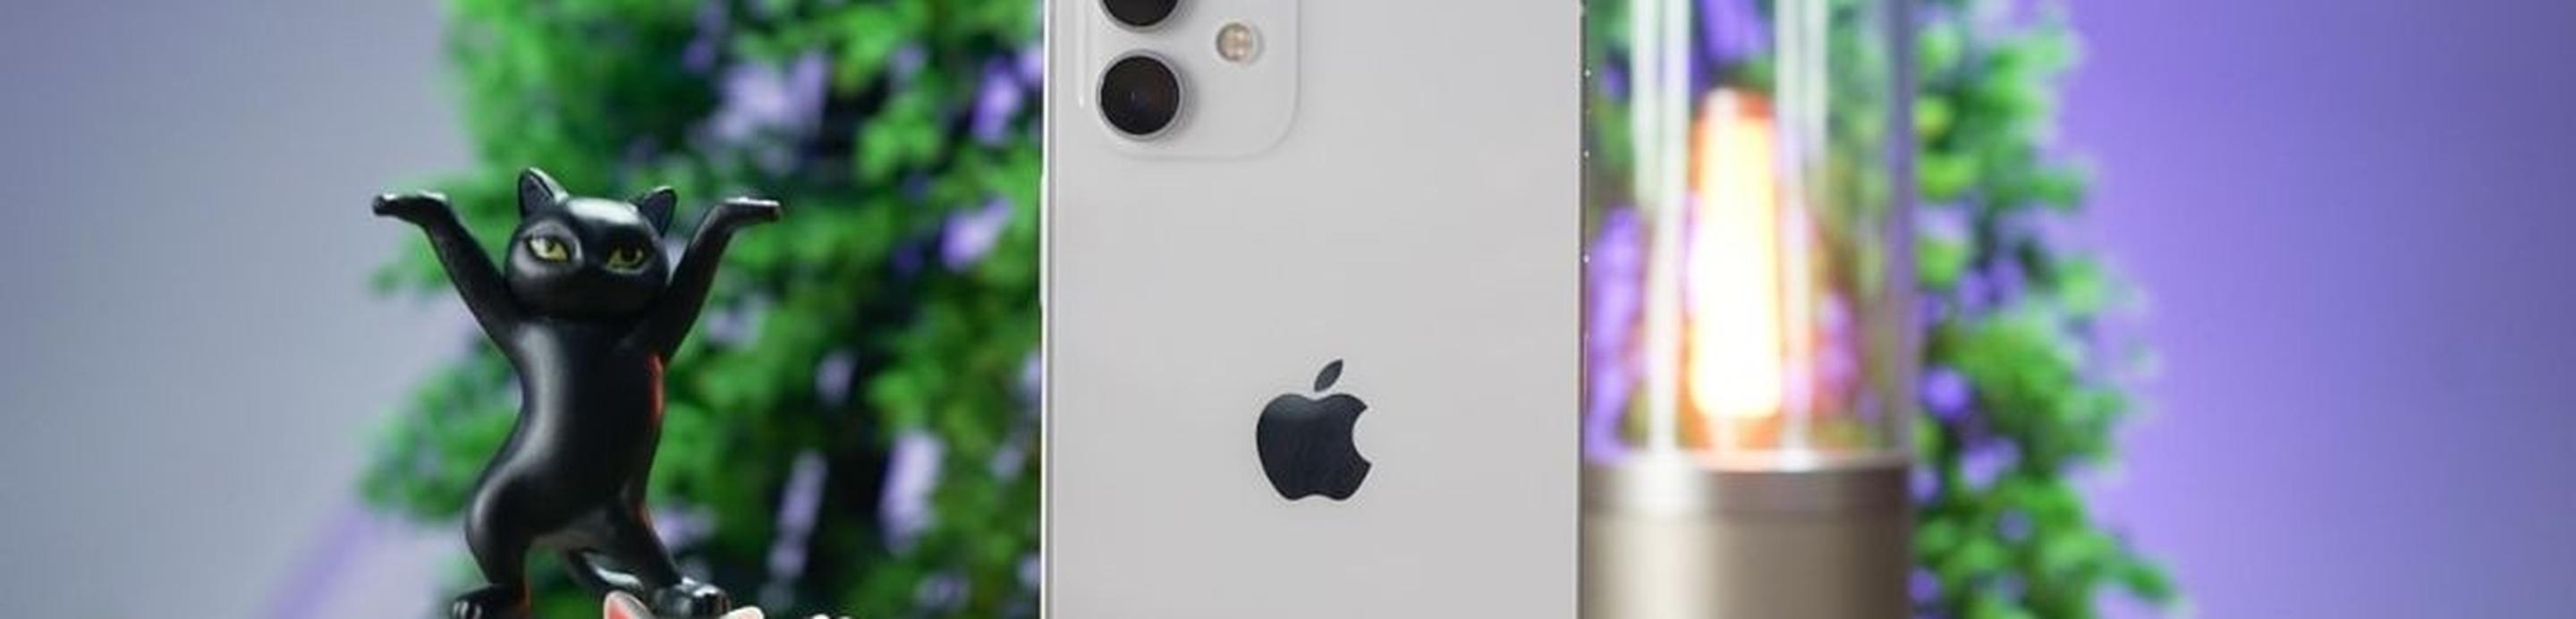 iphone 12 vs pixel 5